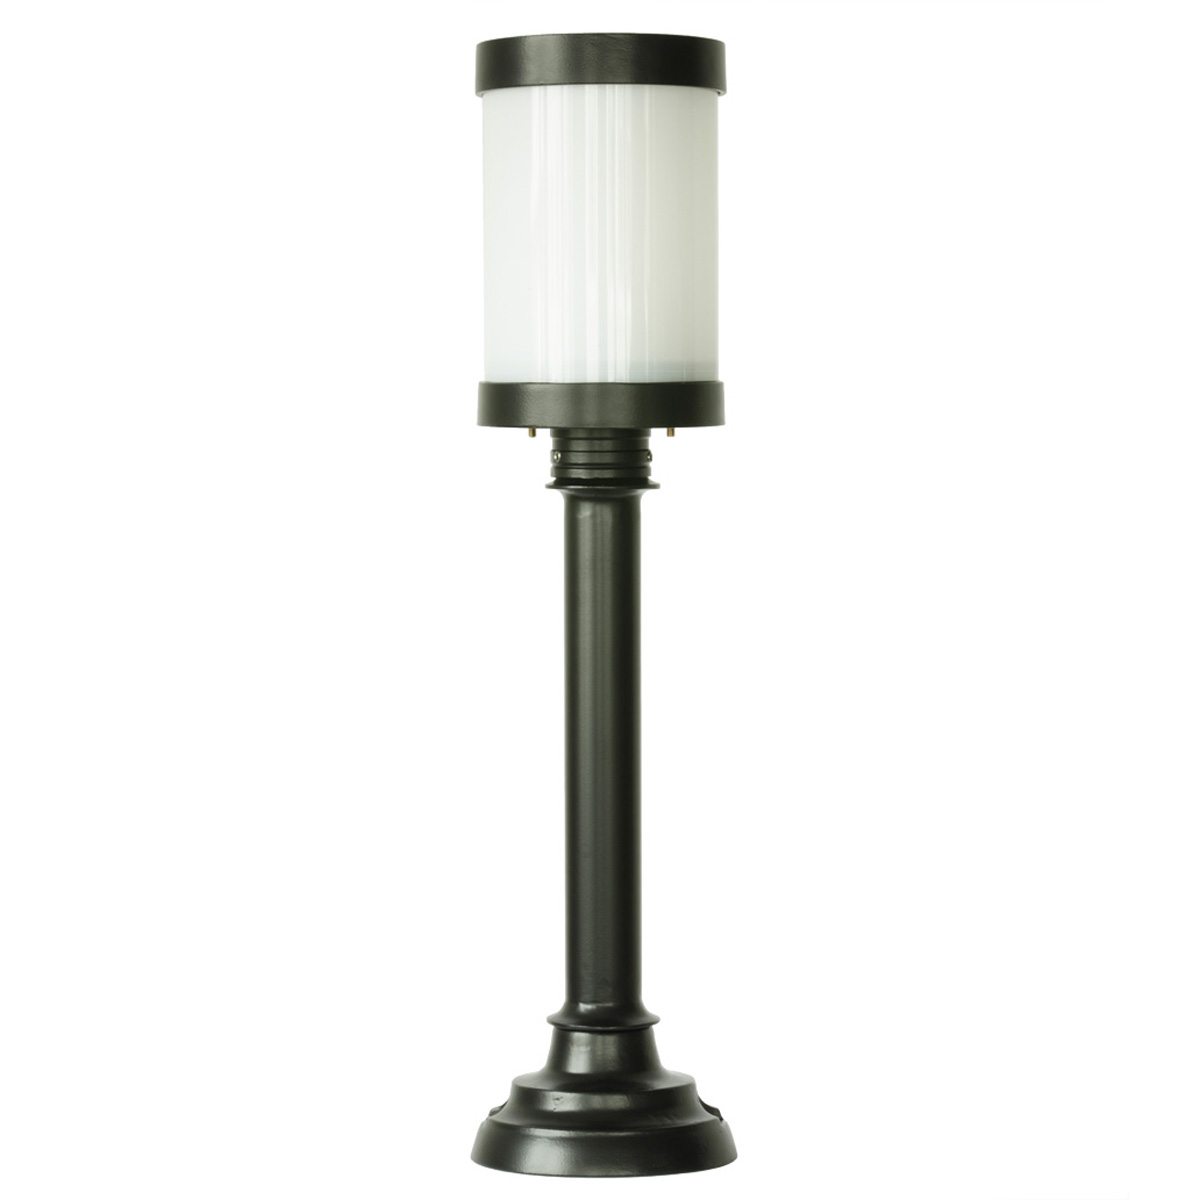 Small tube pedestal light made of cast aluminium Elba 37-OR A2